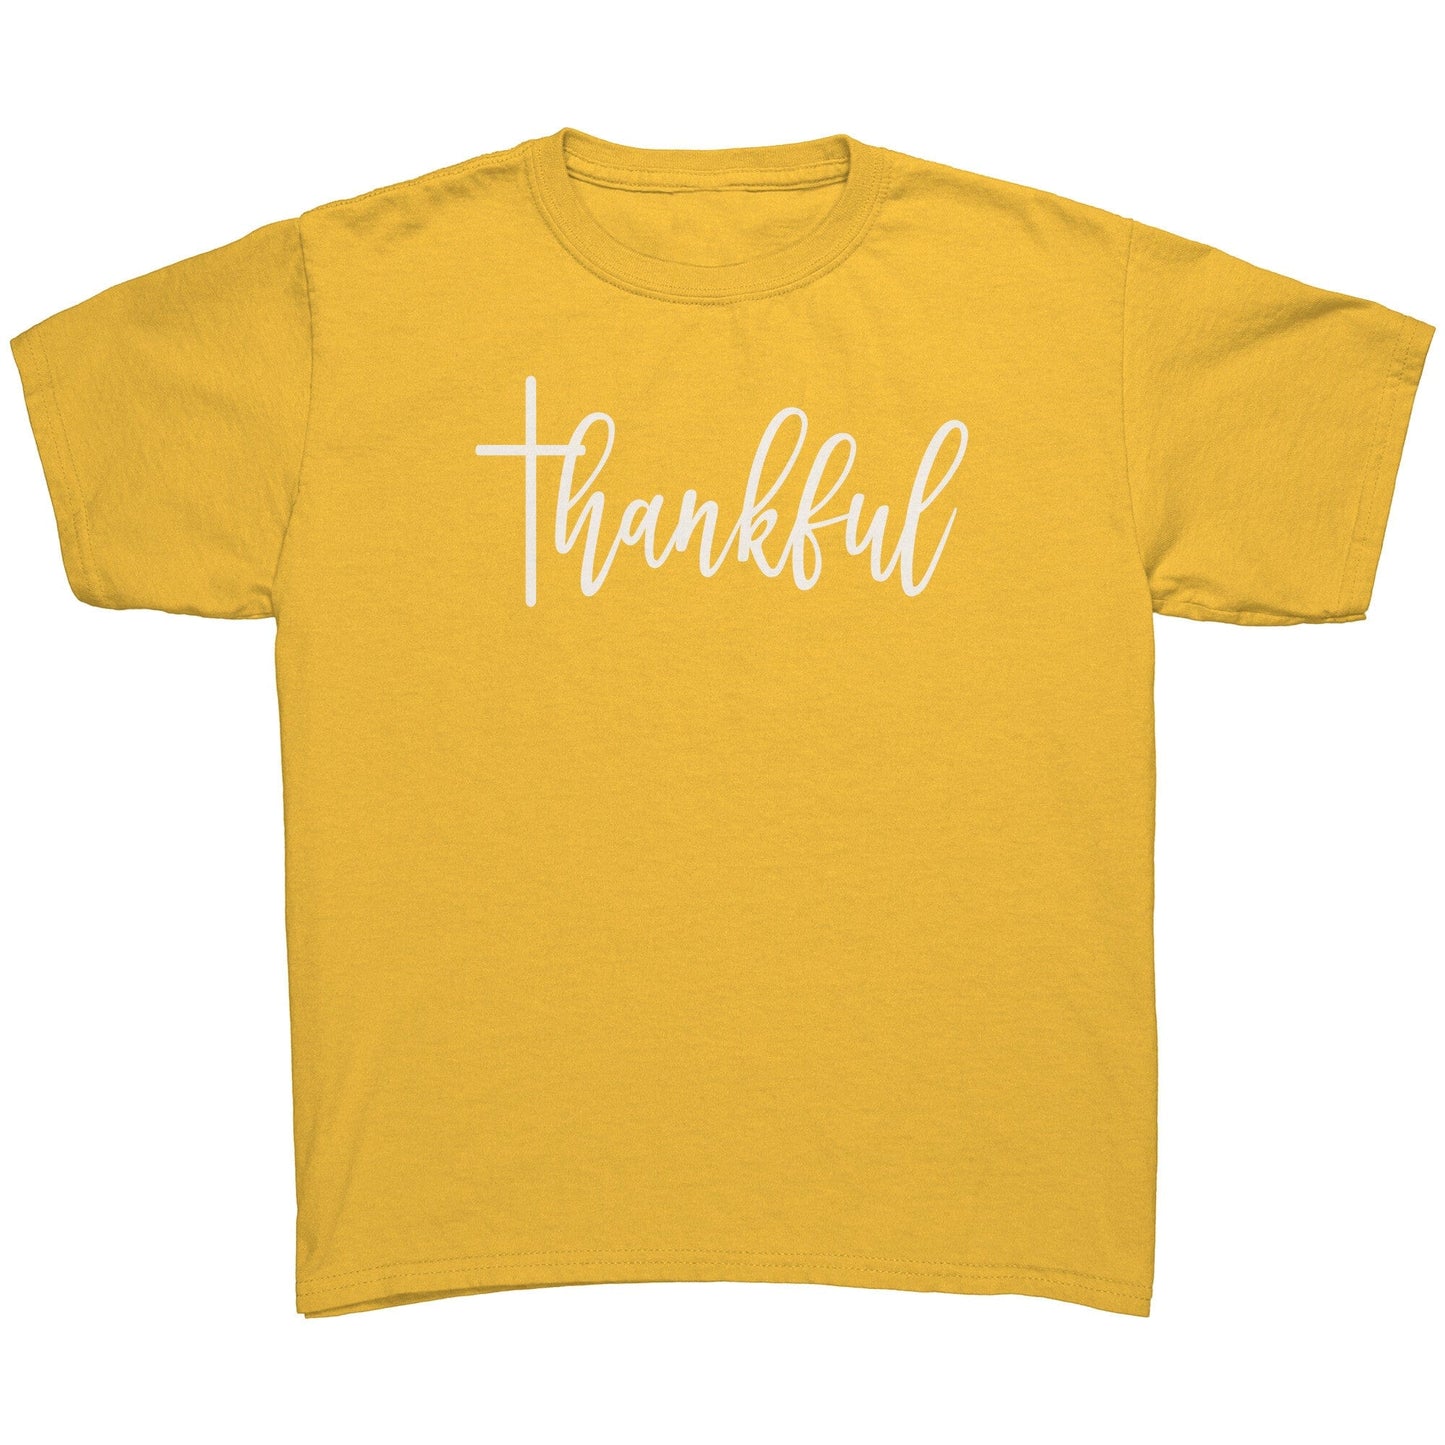 Thankful Youth T-Shirt